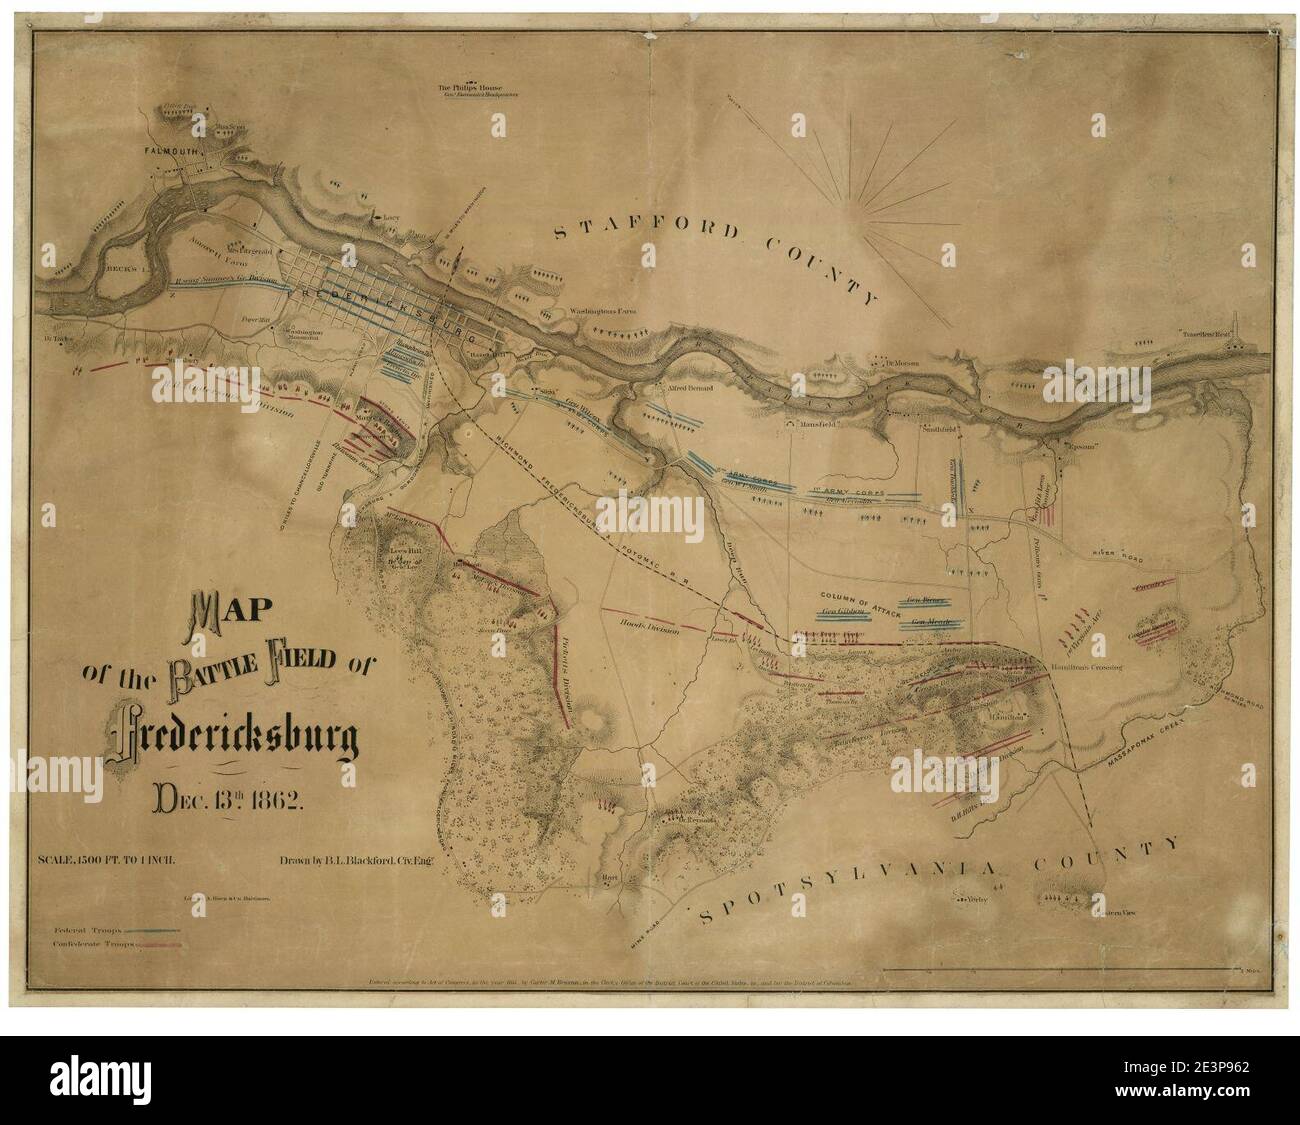 Map of the battle field of Fredericksburg, Dec. 13, 1862 Stock Photo